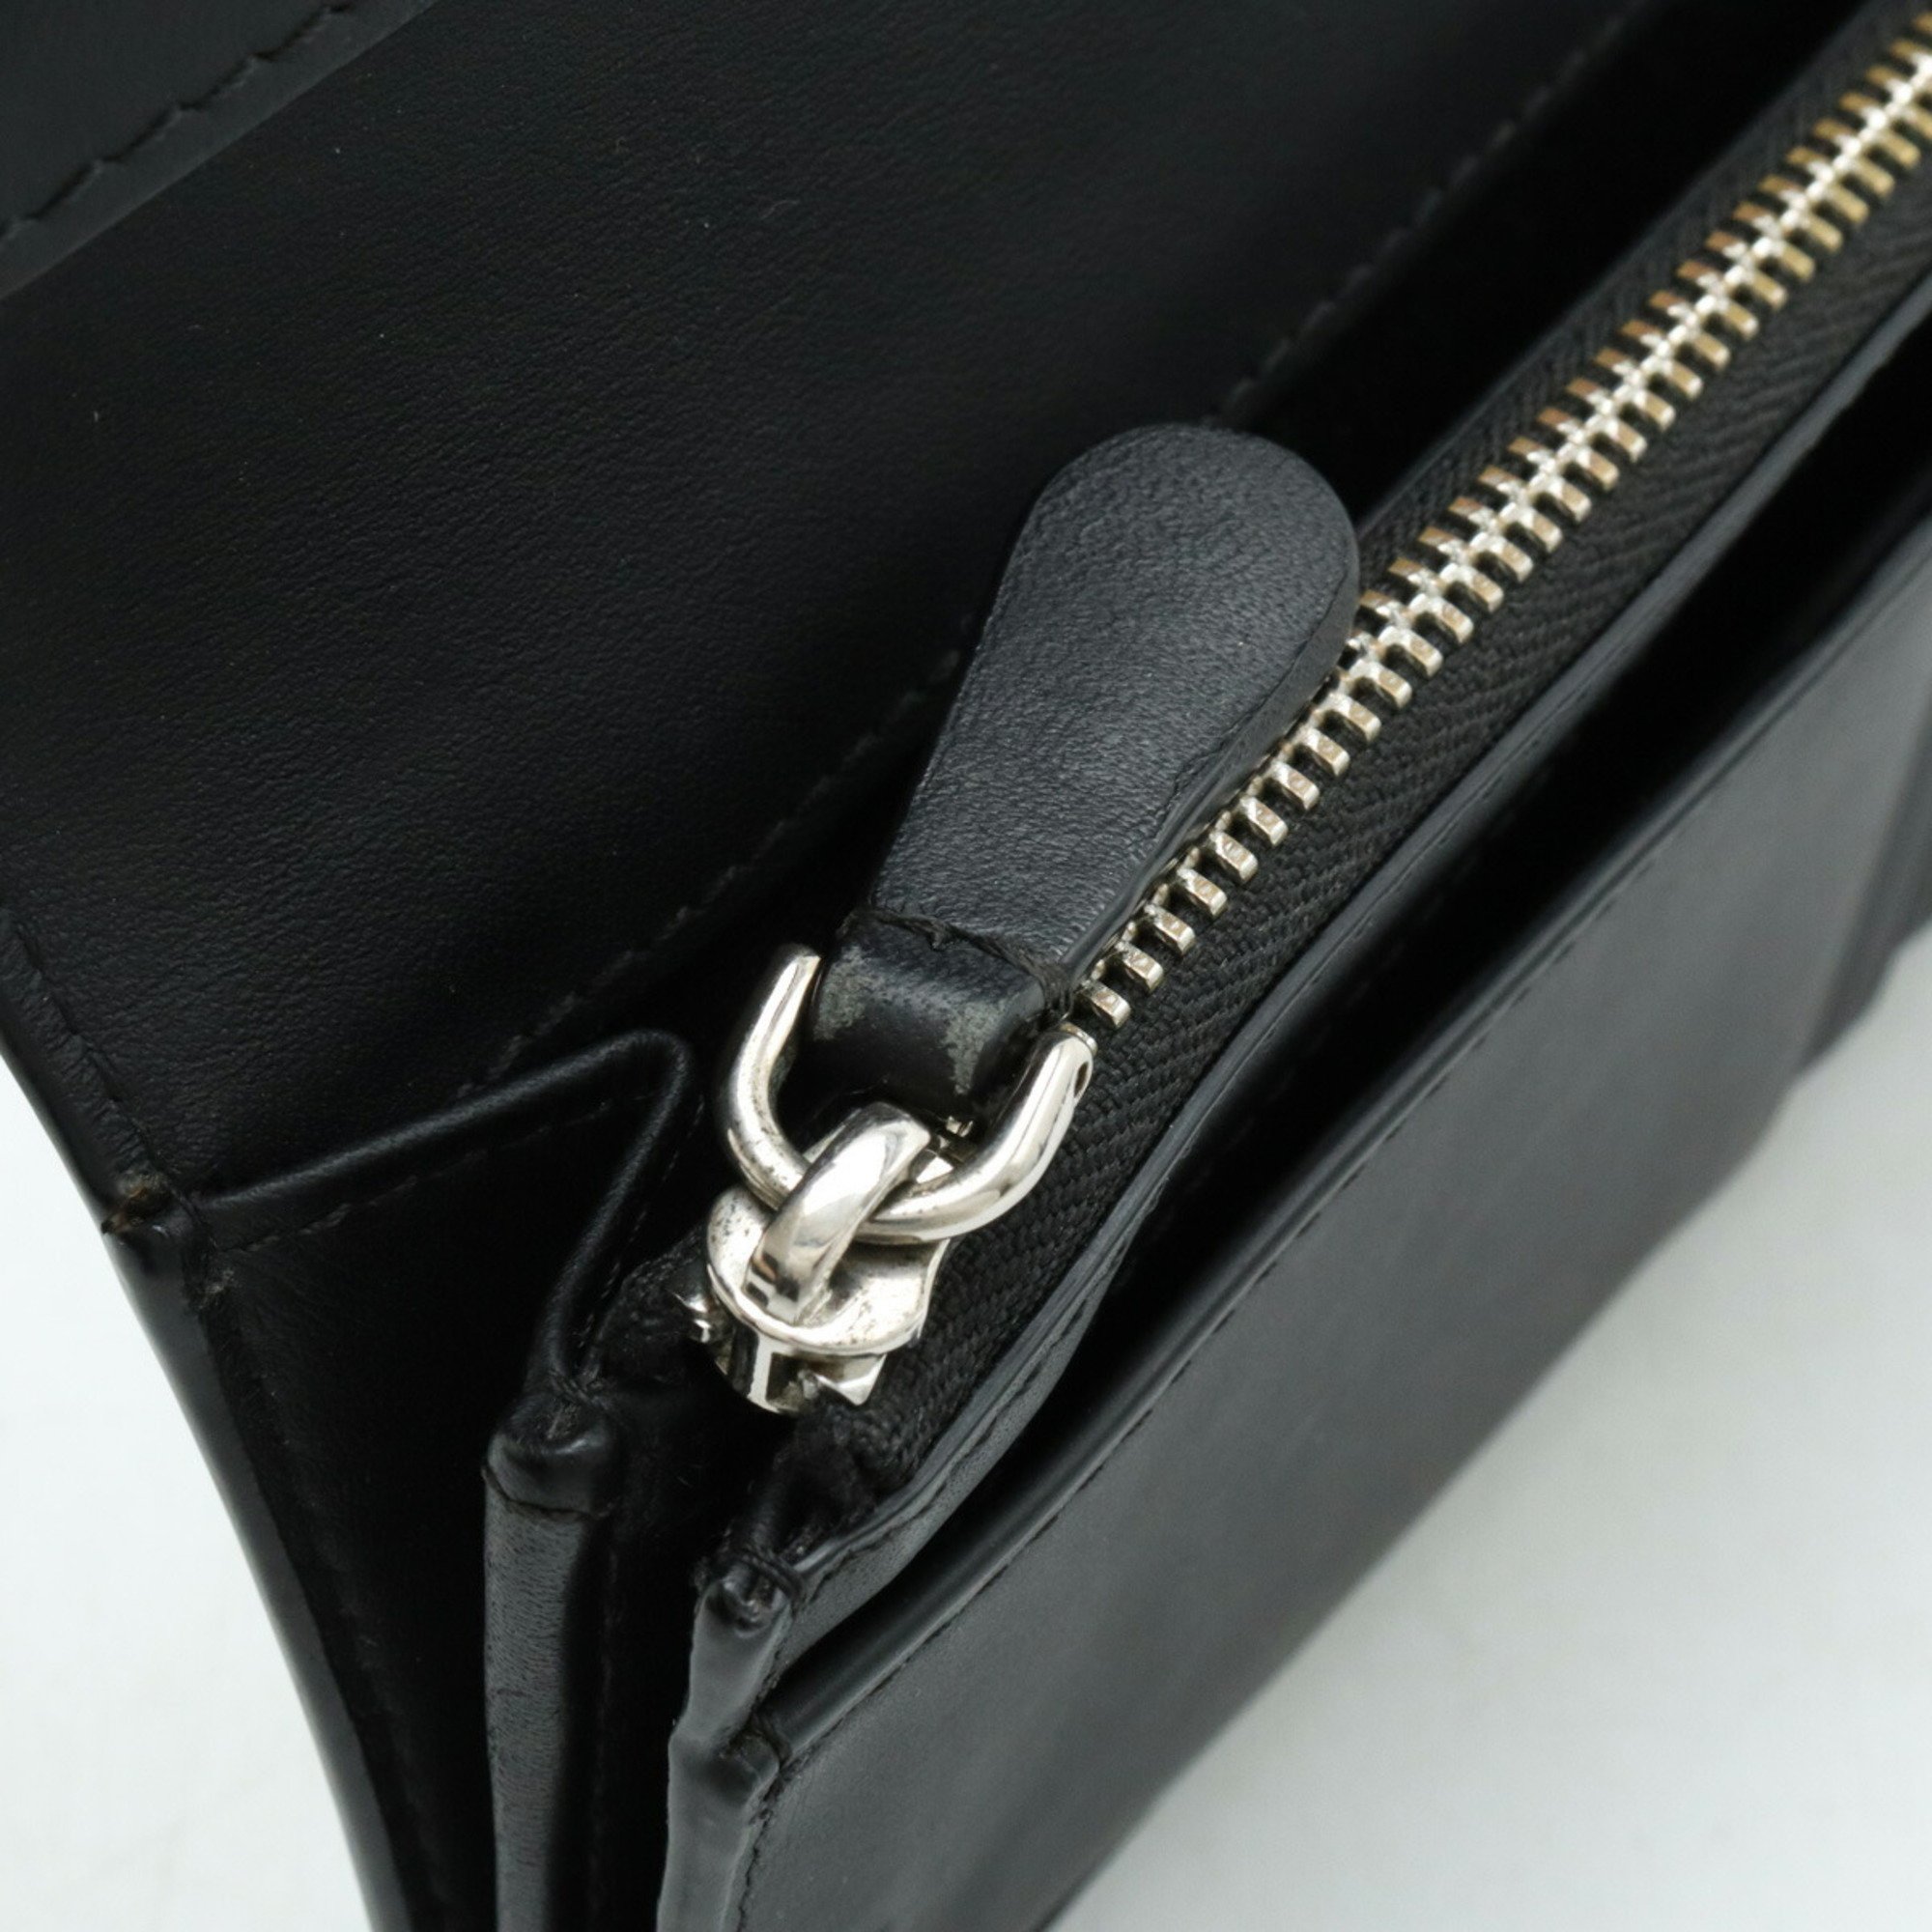 BURBERRY CAVENDISH Check pattern bi-fold long wallet PVC leather grey black 8006072